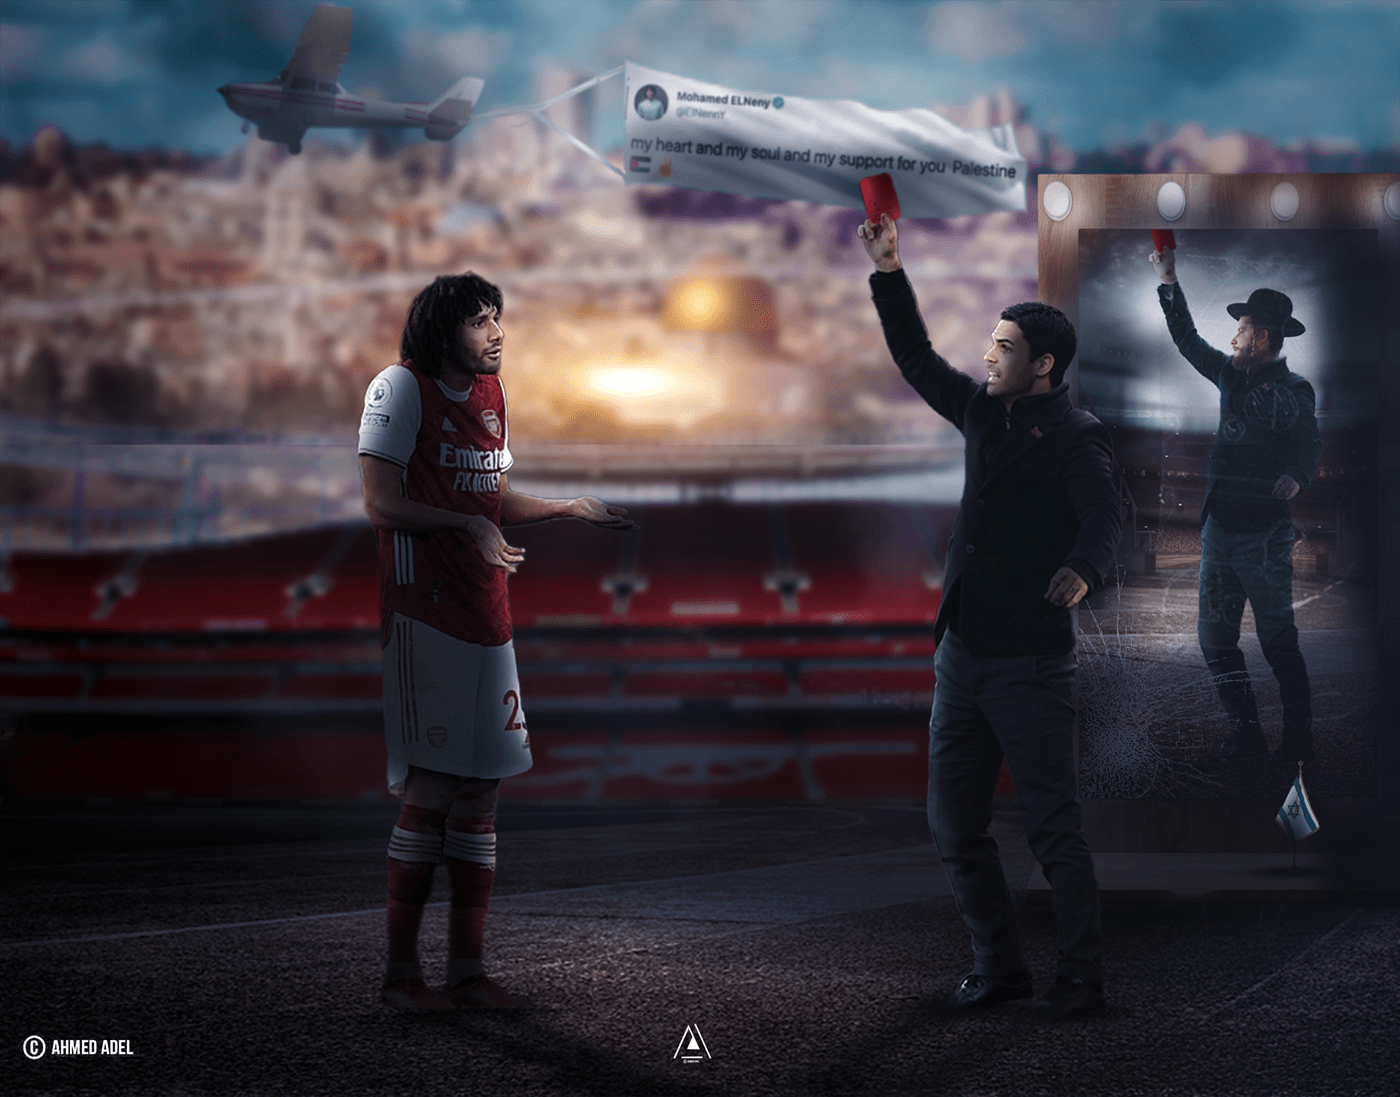 Adobe Photoshop arsenal egypt football Graphic Designer manipulation Mohamed Elneny Quds stadium support